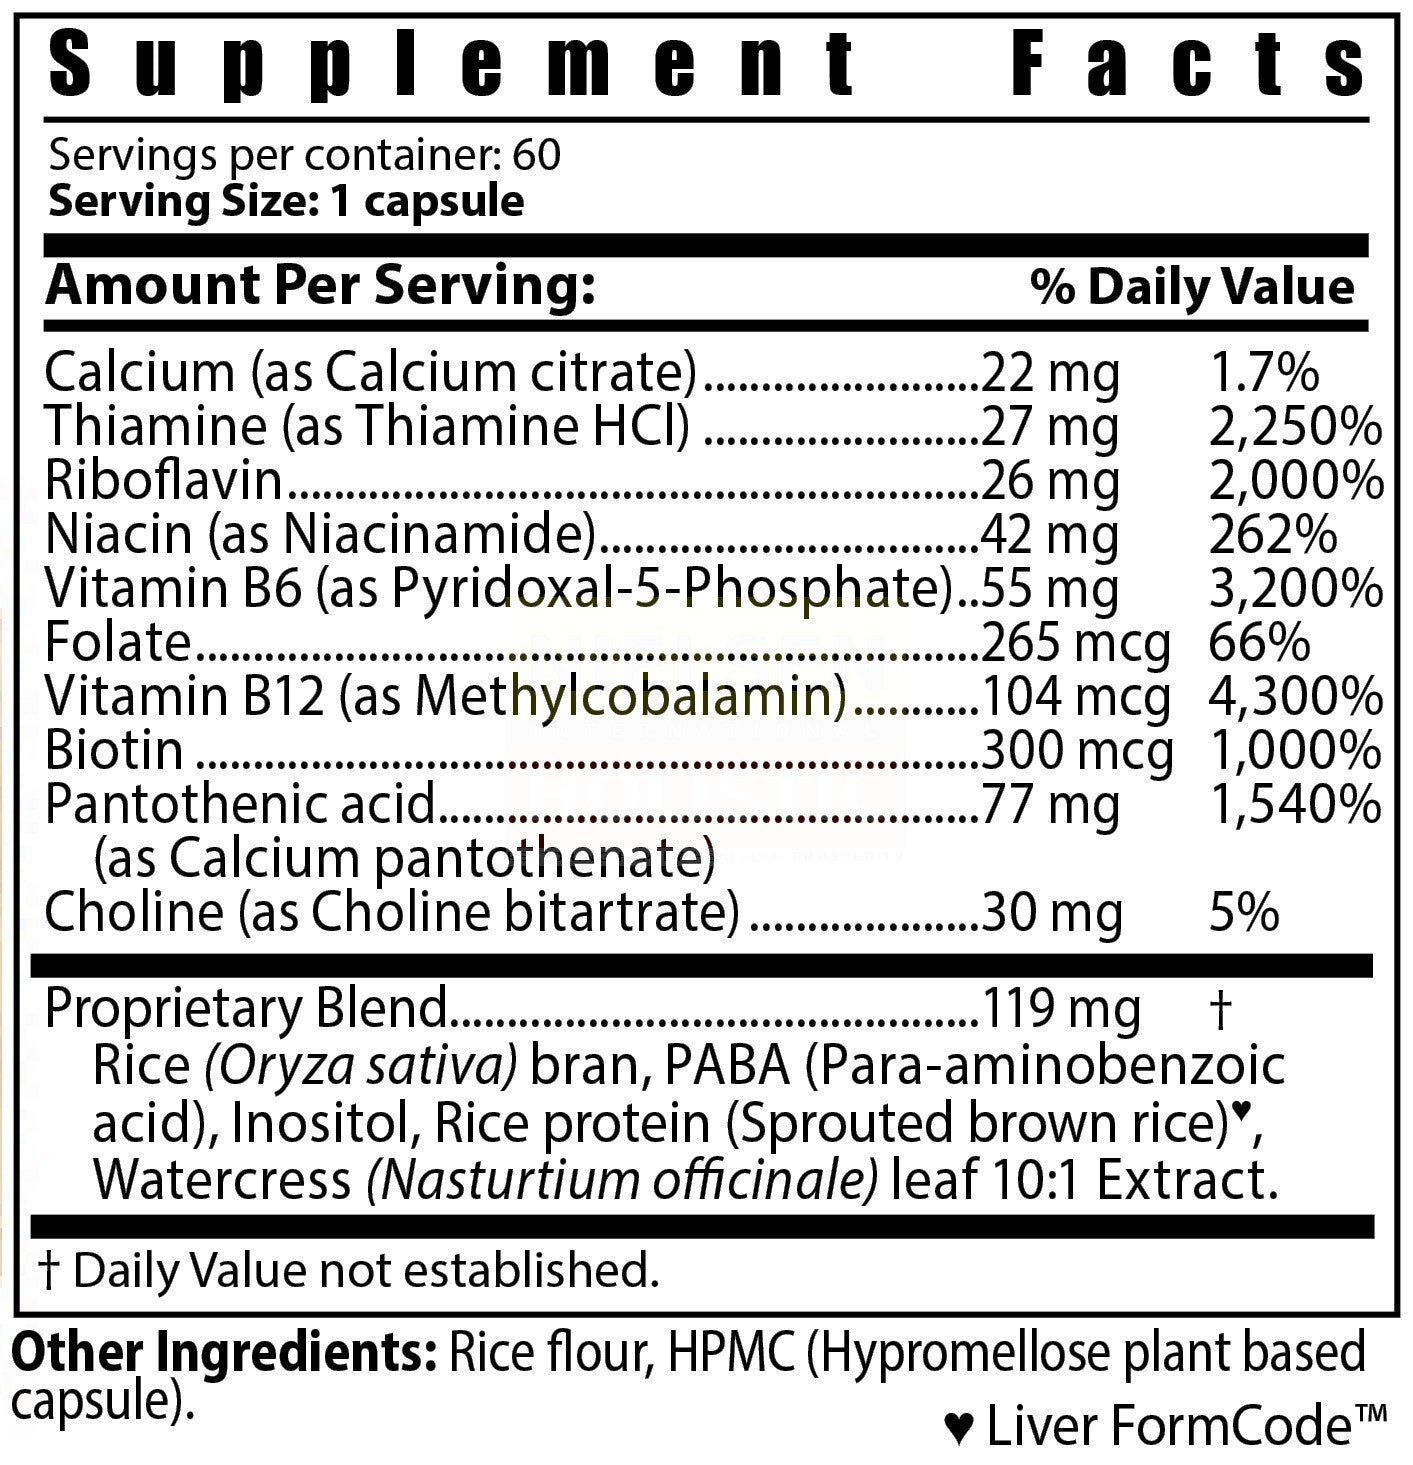 Inno-Vita B-Comp™ -- 60 veggie capsules - Healthy Nerve / Cell Metabolism